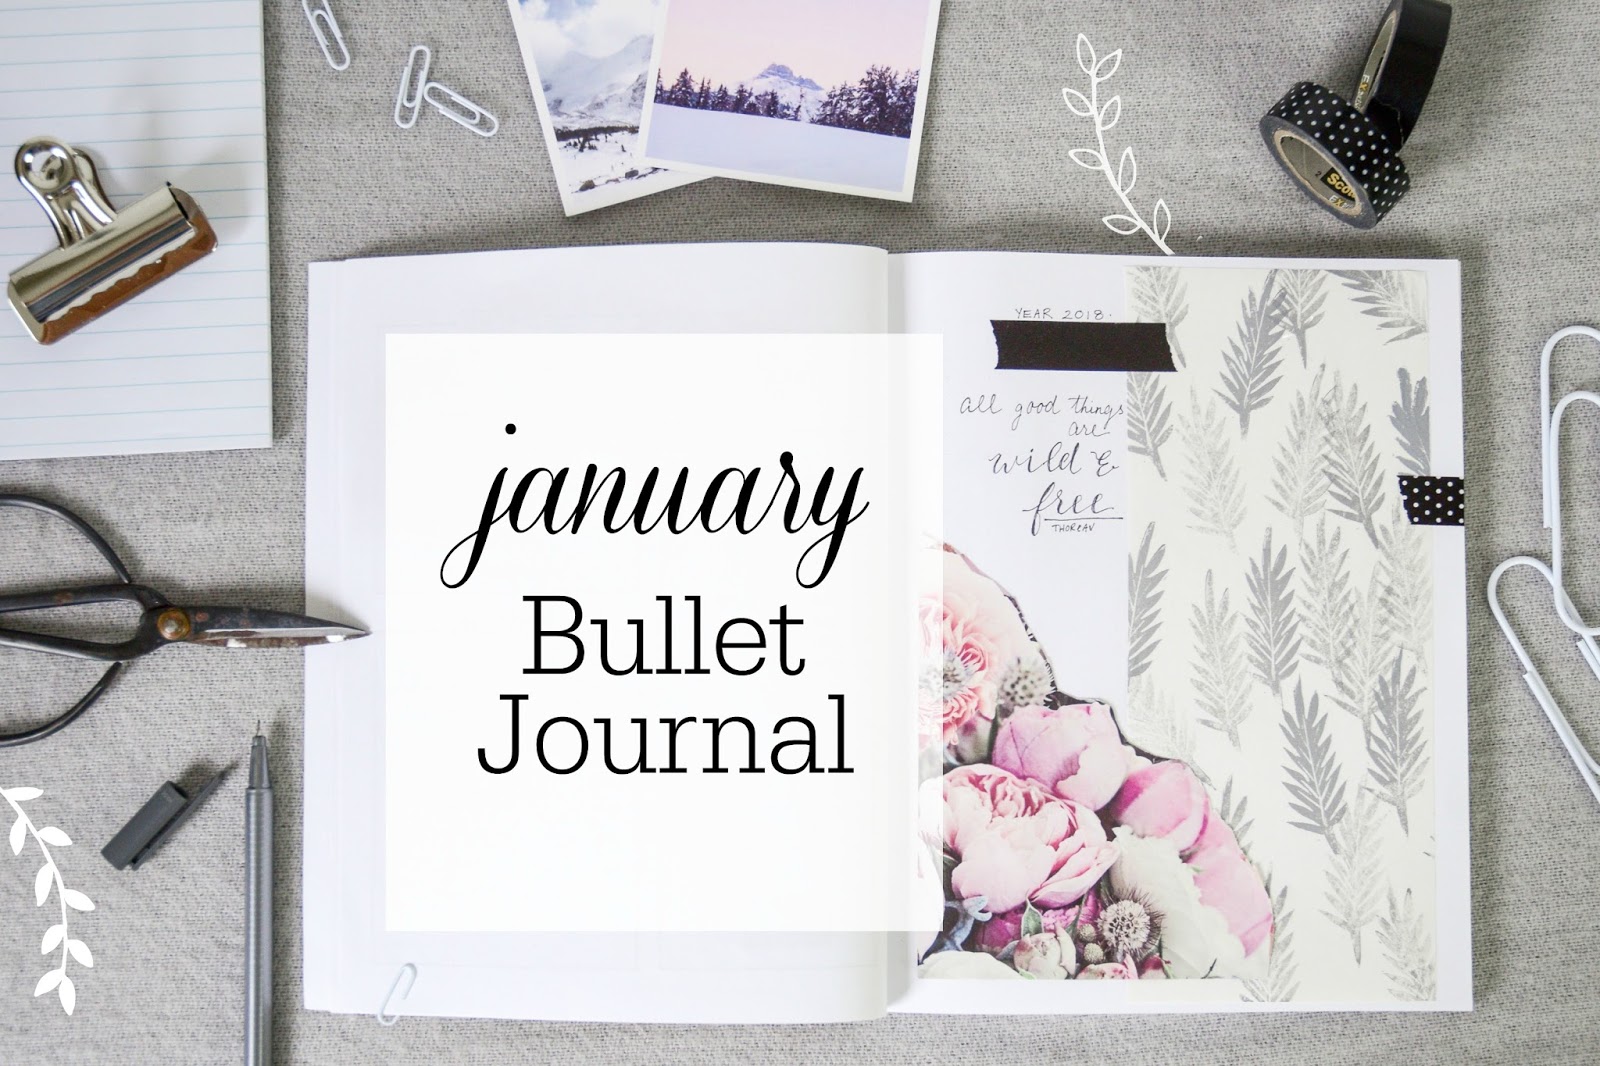 New Year Bullet Journal Set Up January 2017 Life Dispensed